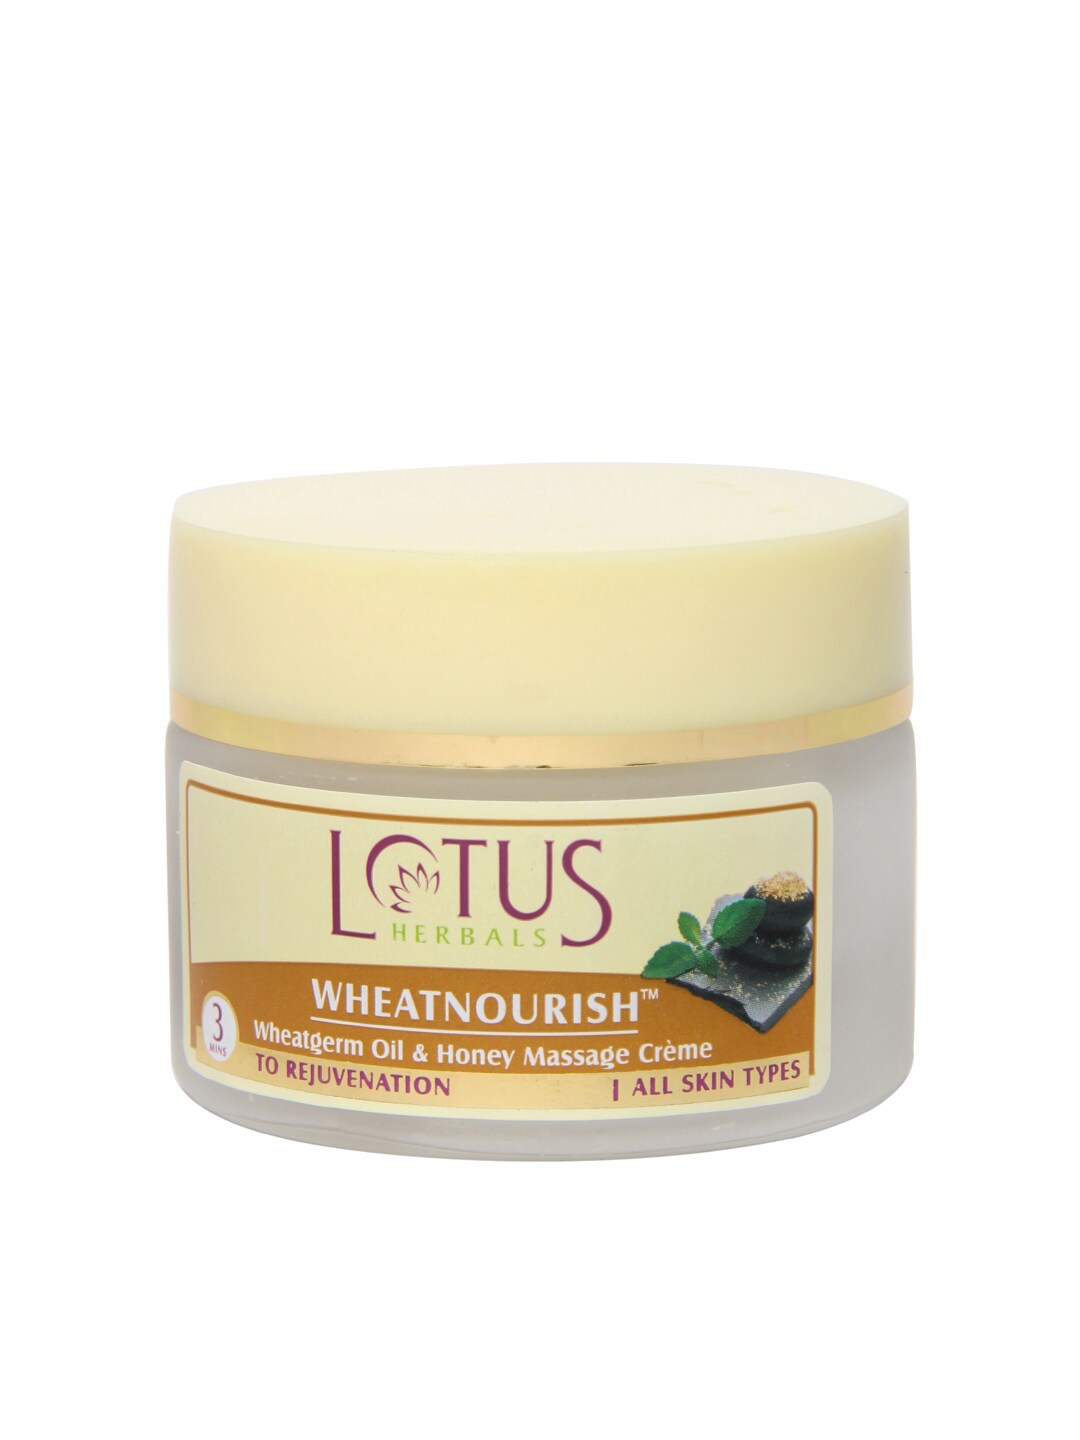 Lotus Herbals Wheatnourish Wheatgerm Oil & Honey Massage Creme